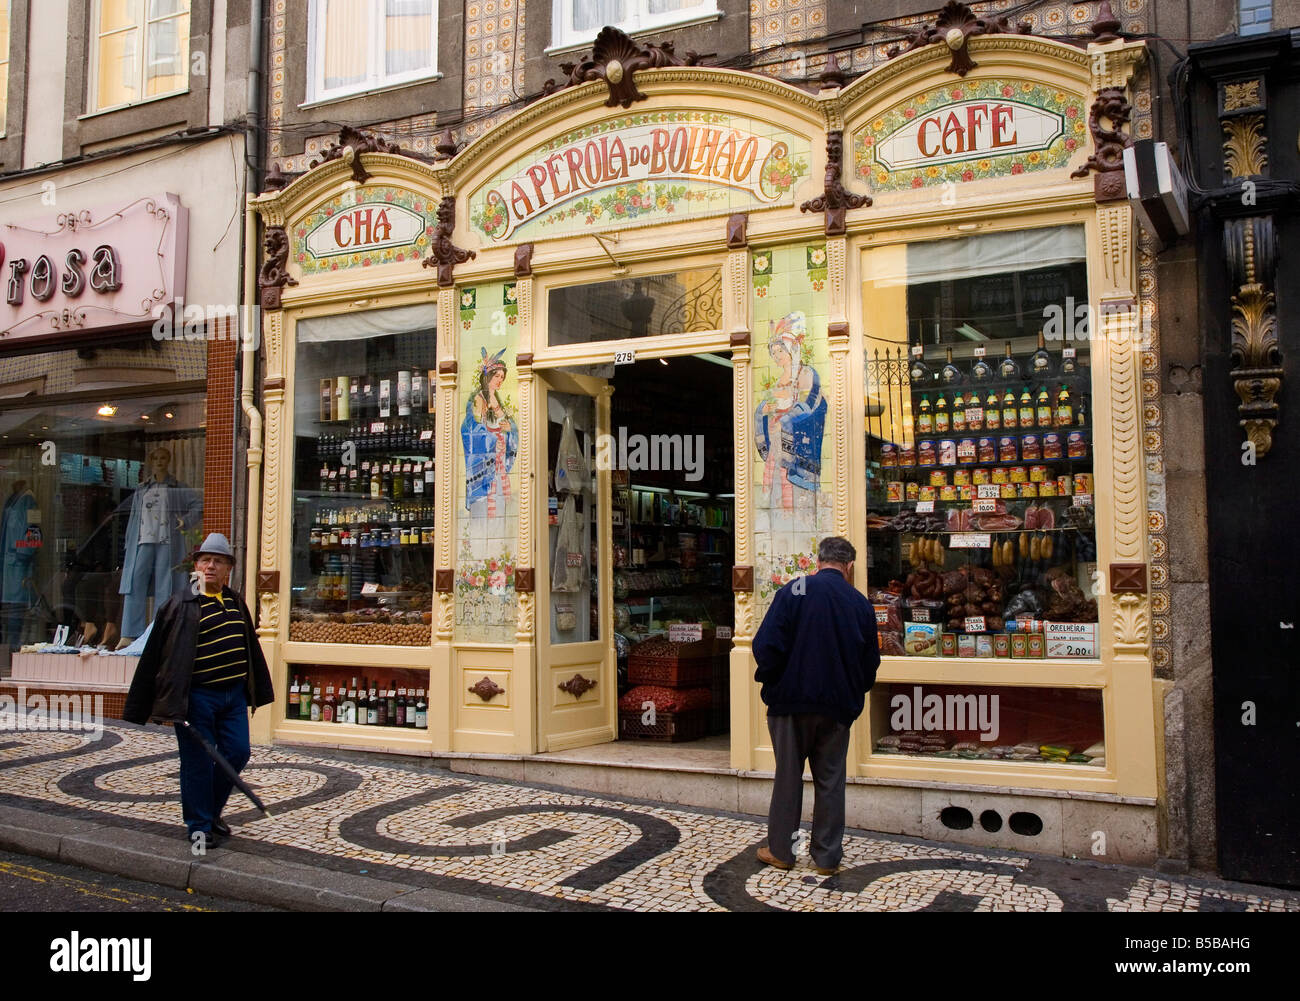 A Perola Do Bolhao, Art Nouveau cafe and delicatessen, Oporto, Portugal, Europe Stock Photo